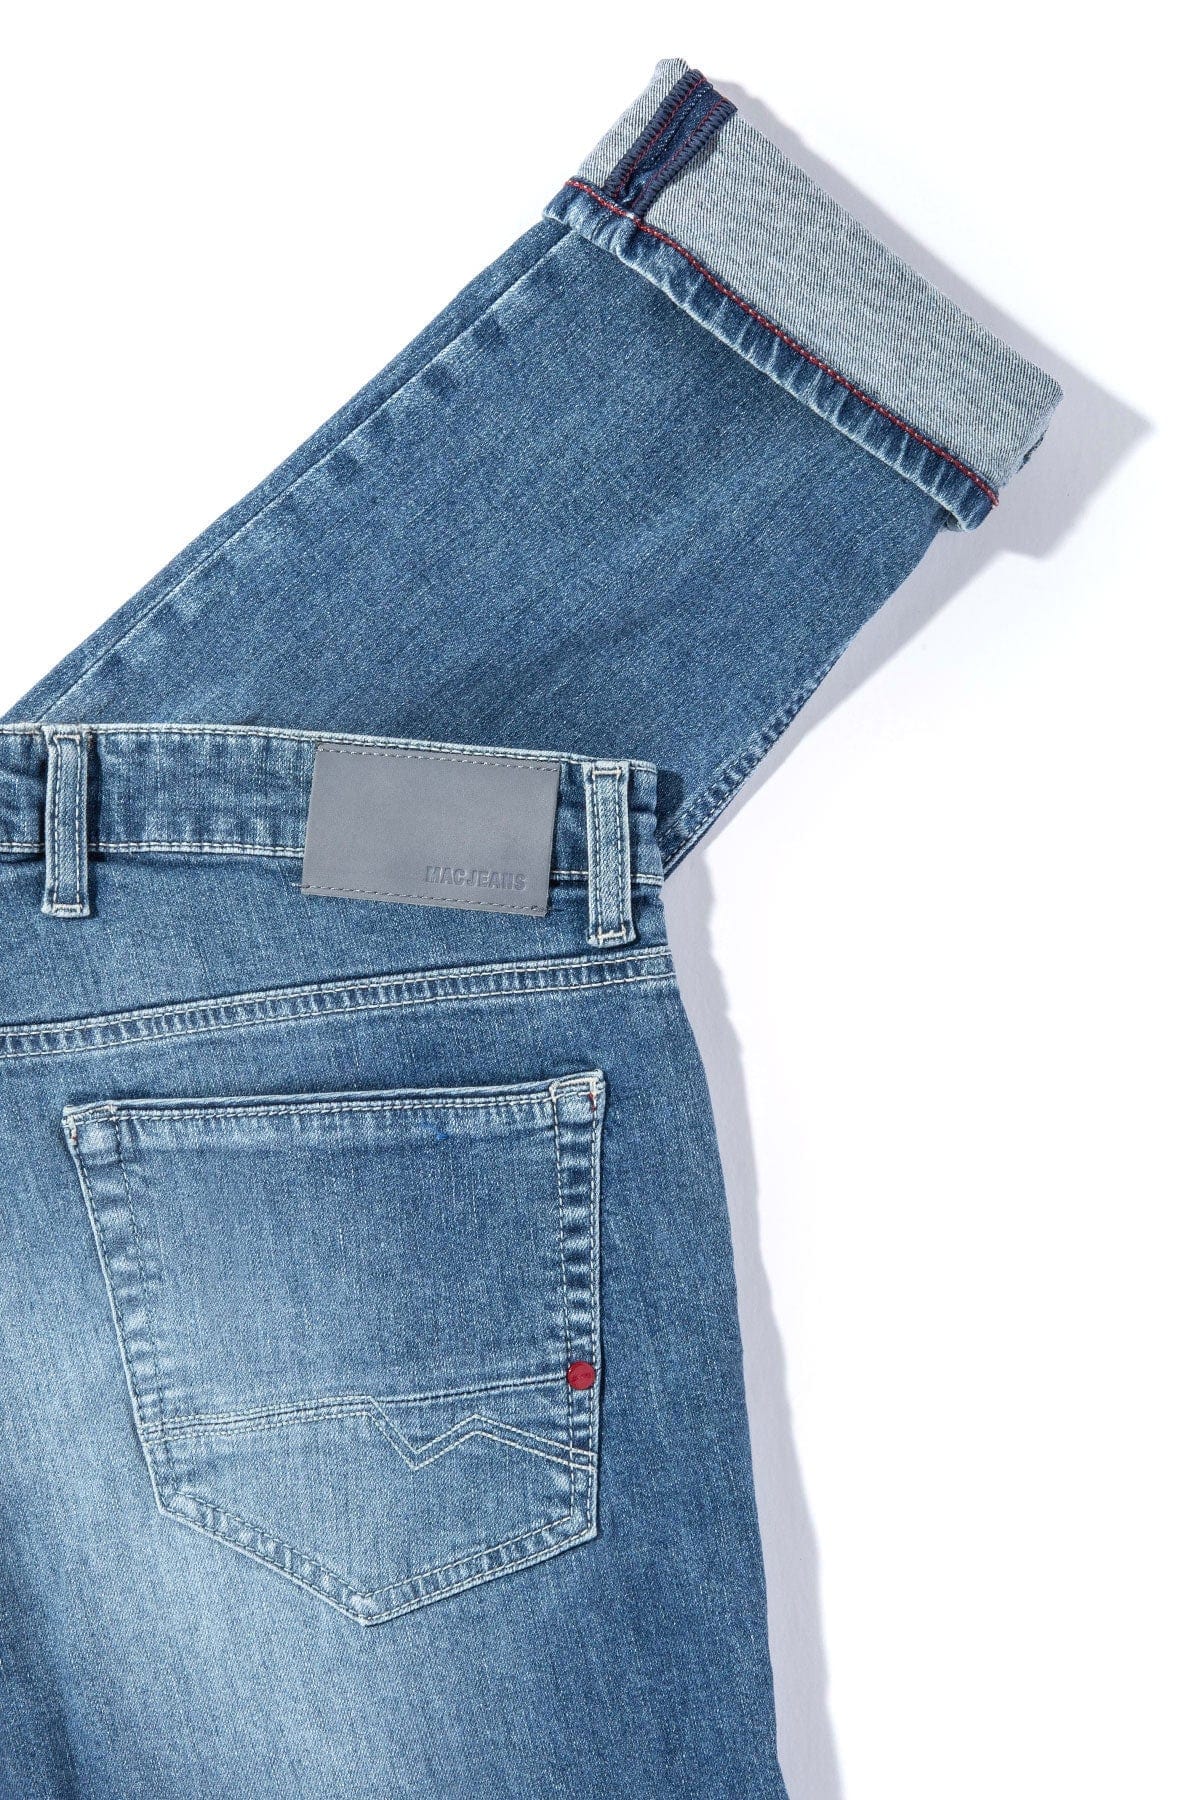 MAC Arne Pipe Jeans in Mid Blue Japanese Vintage Wash - AXEL'S